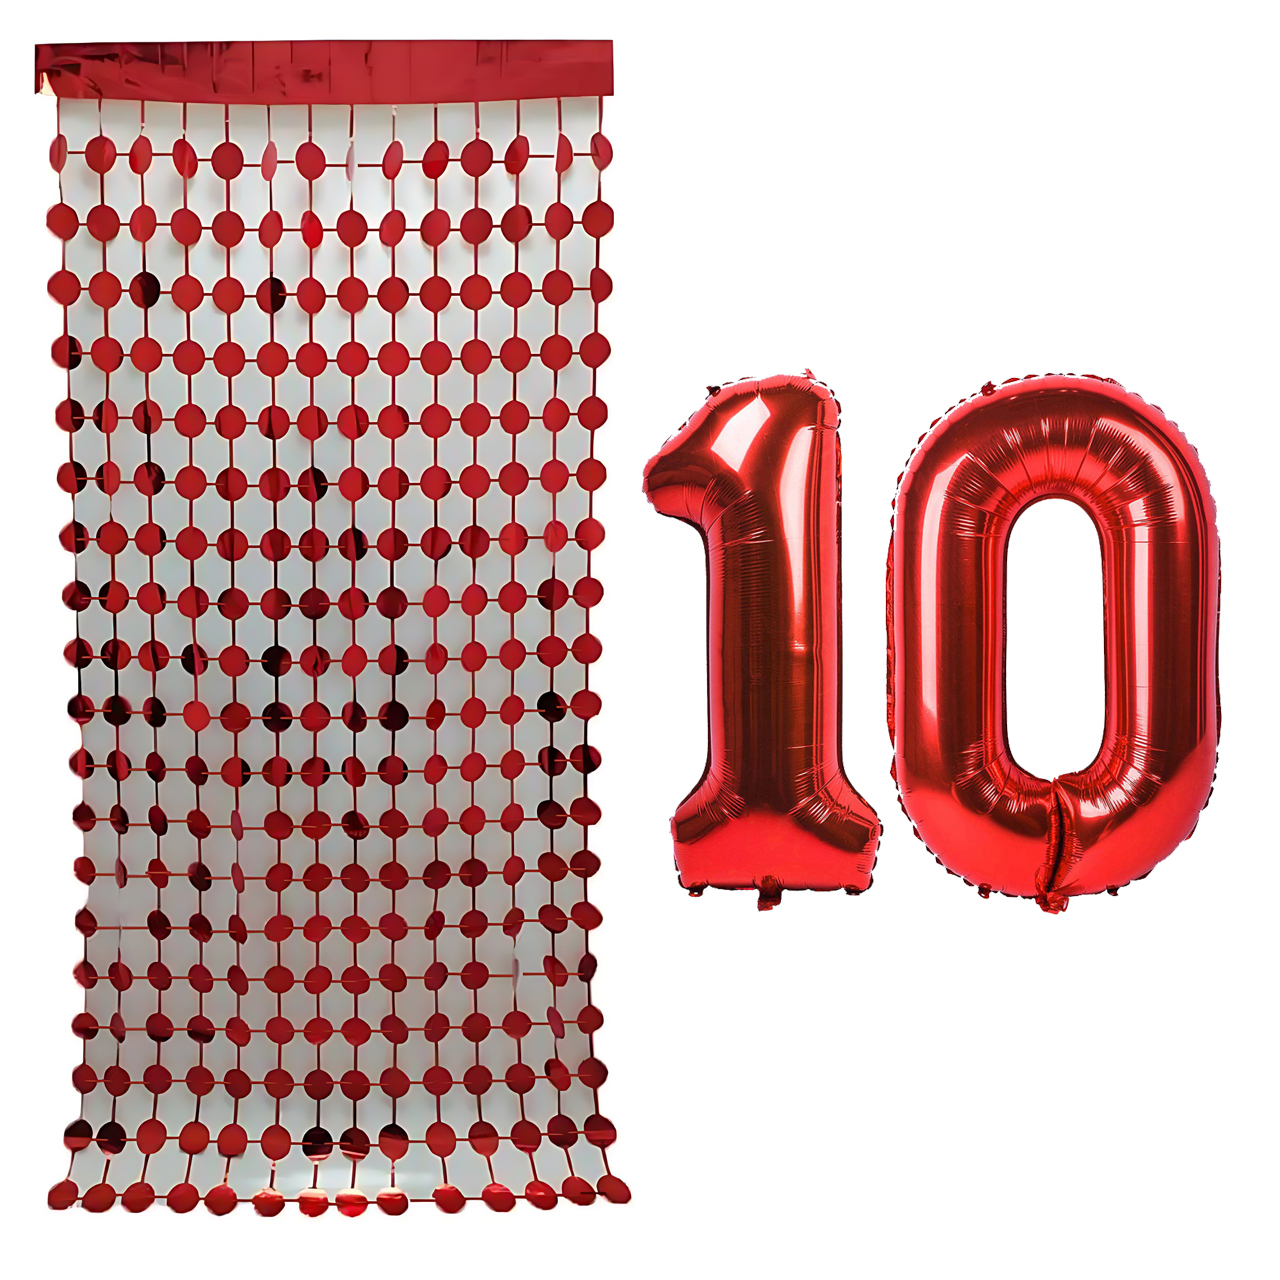 بادکنک فویلی مستر تم طرح عدد 10 به همراه ریسه تزئینی بسته 3 عددی